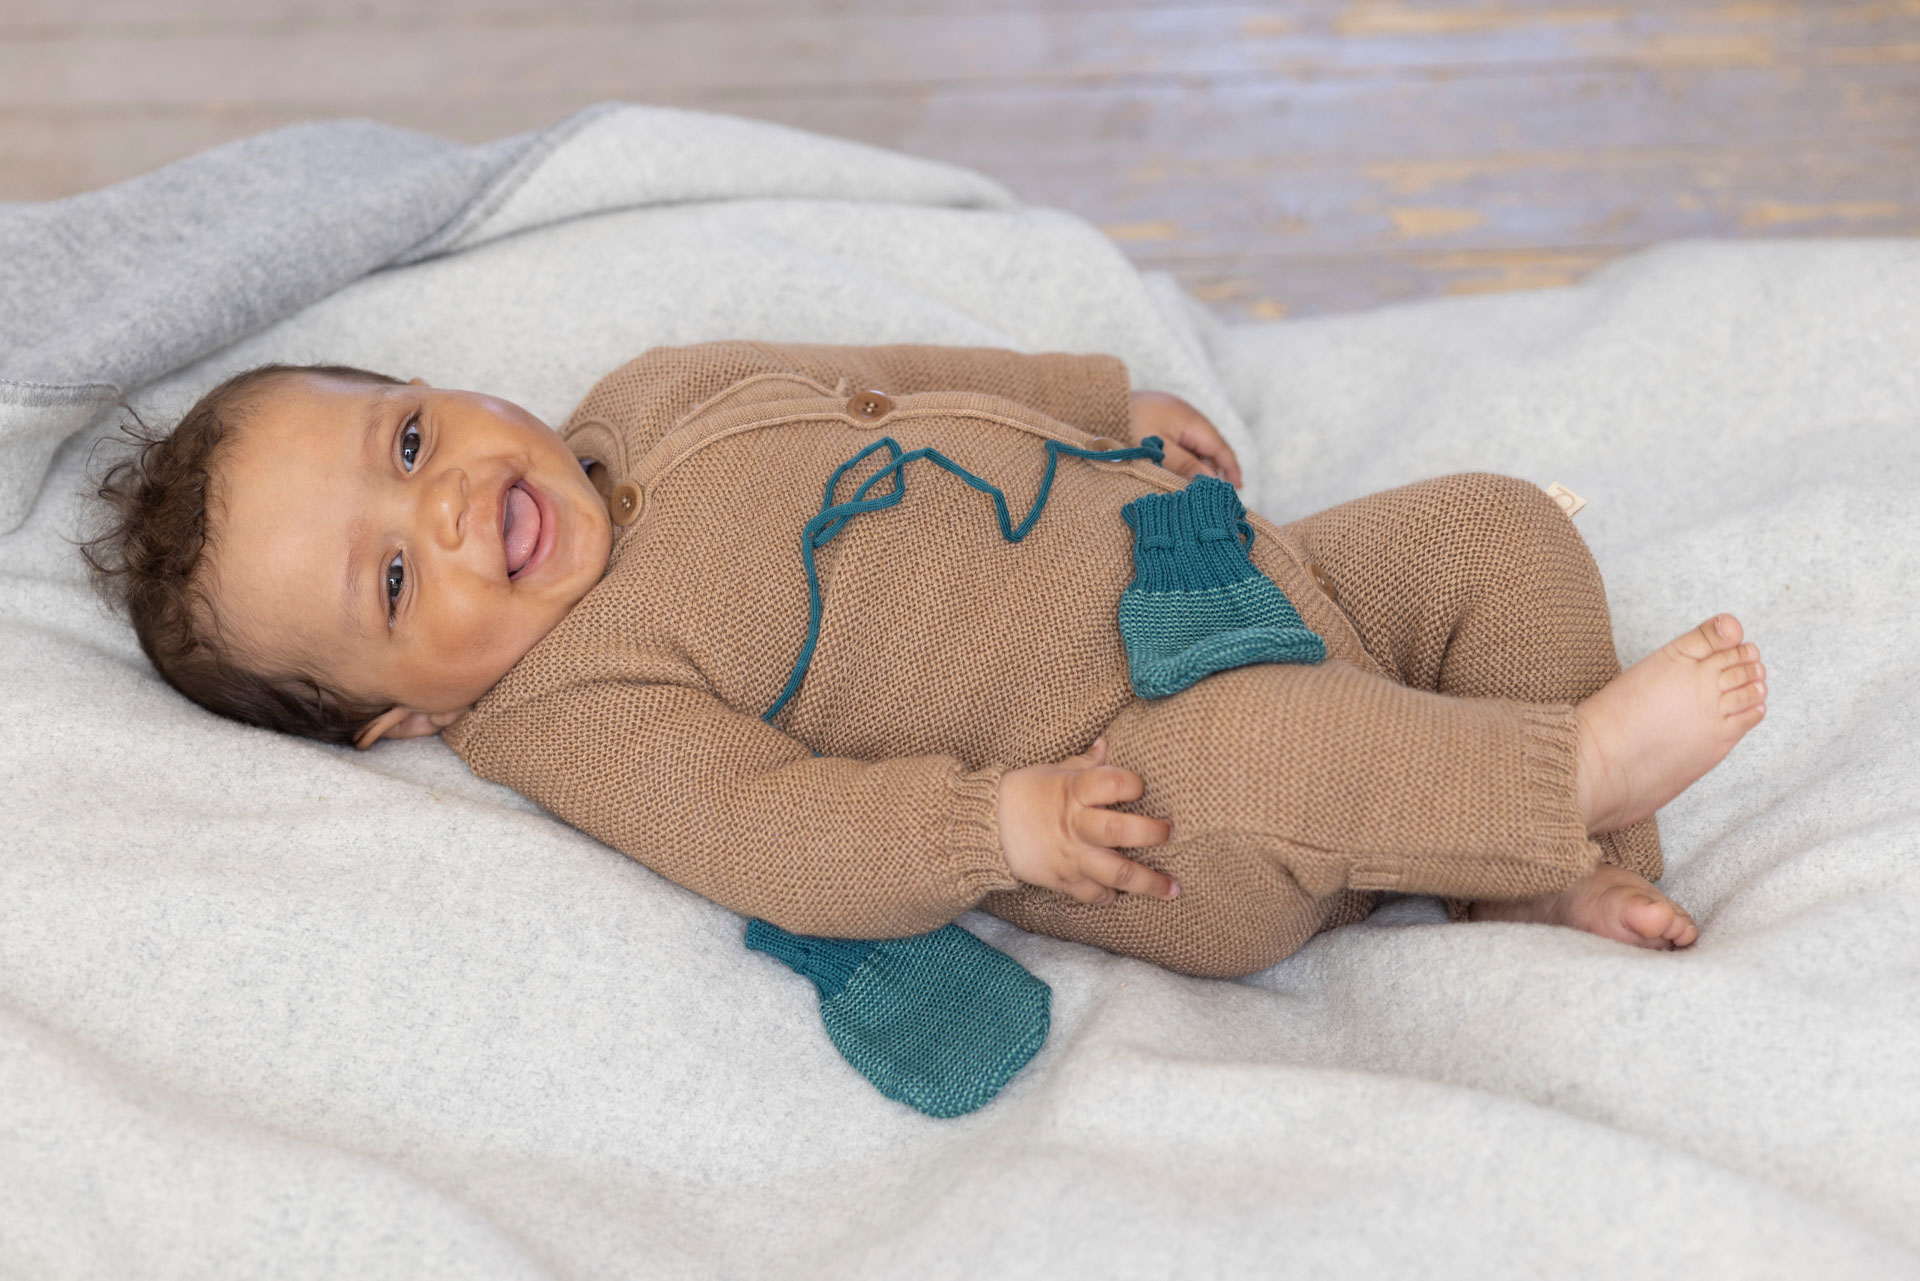 Gigoteuse bébé en tricot de laine mérinos bio - Disana